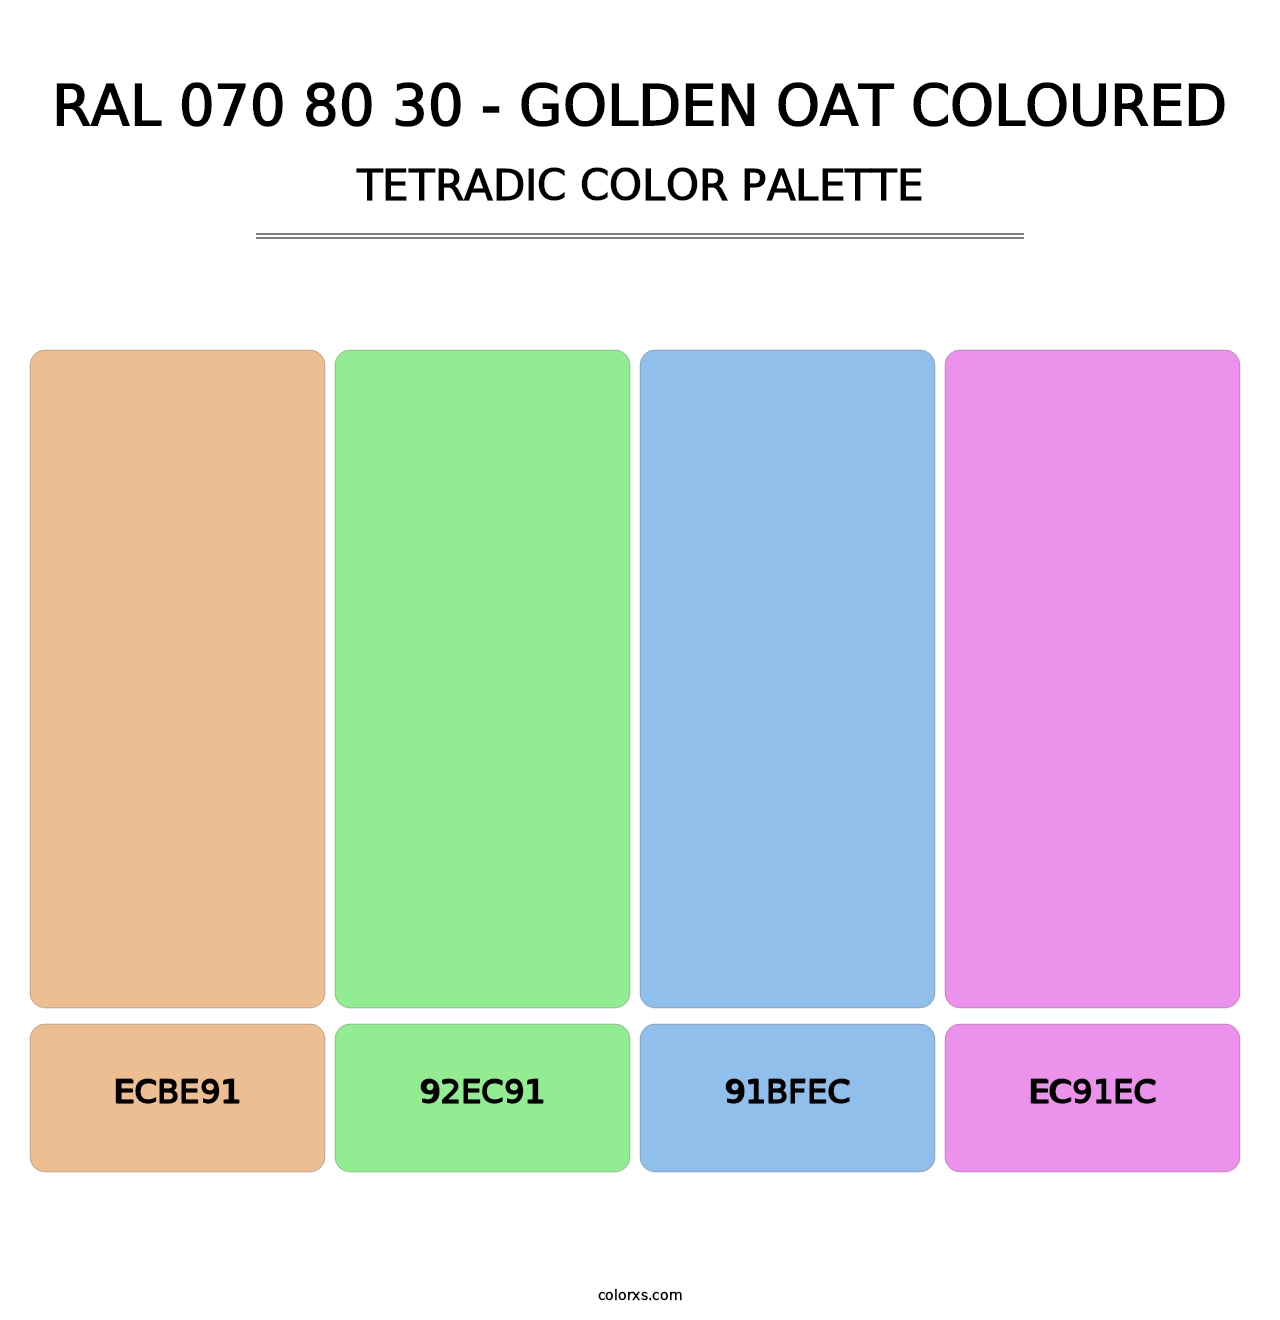 RAL 070 80 30 - Golden Oat Coloured - Tetradic Color Palette